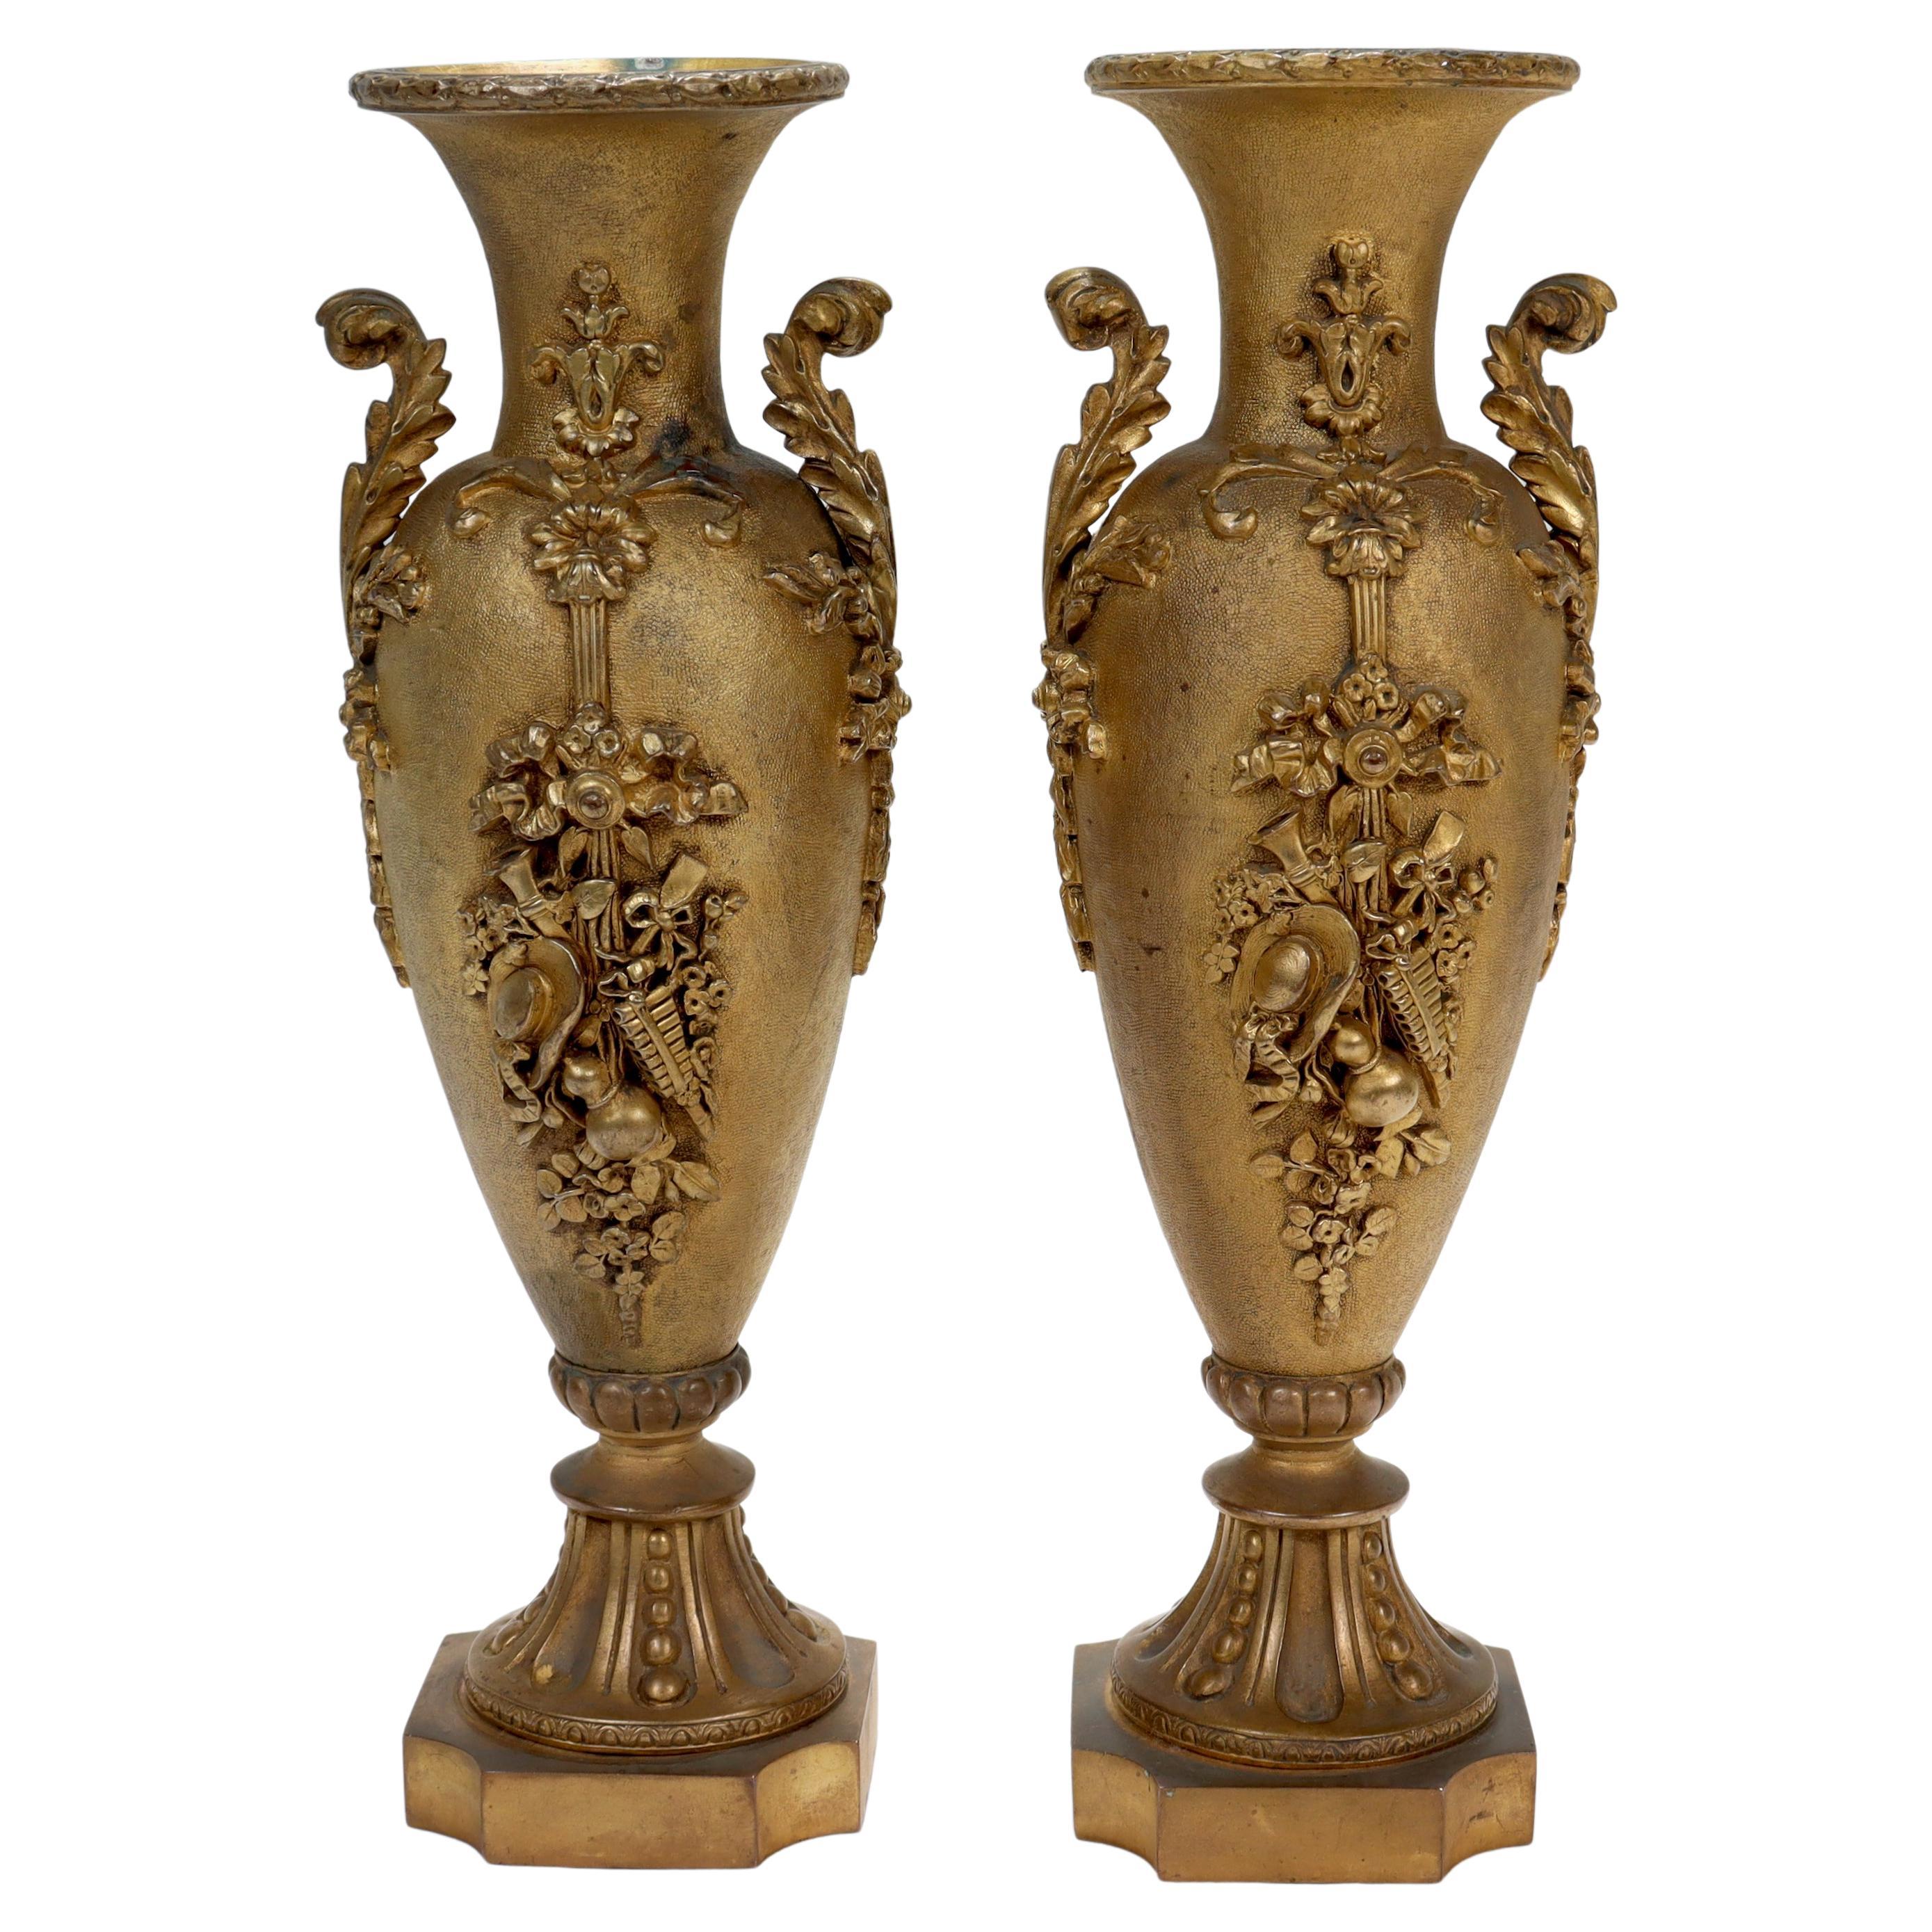 Antique Second Empire French Doré Gilt Bronze Vases or Urns